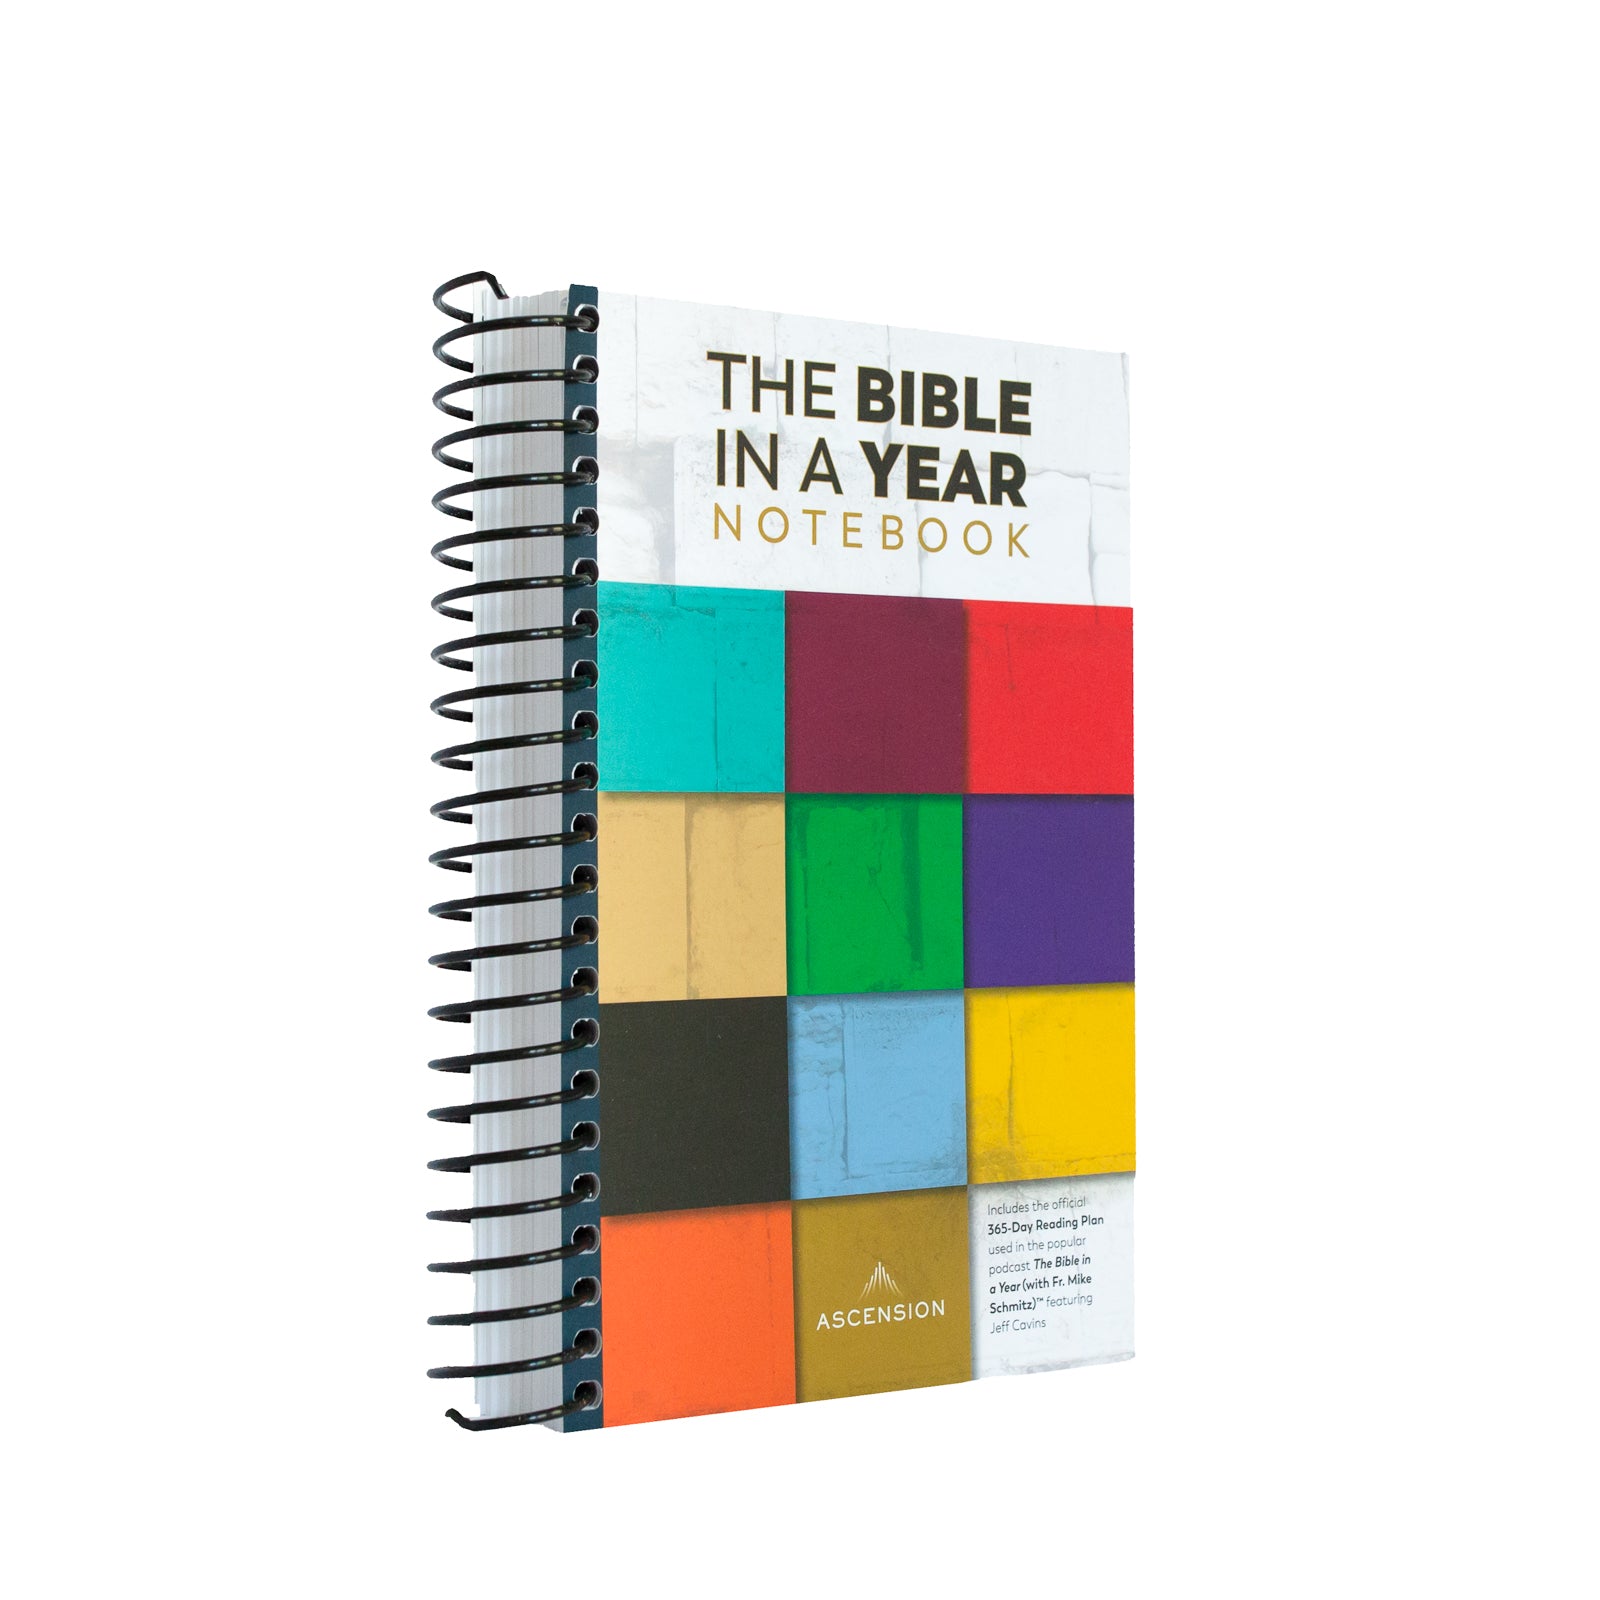 Organize Your Bible Studies Notes